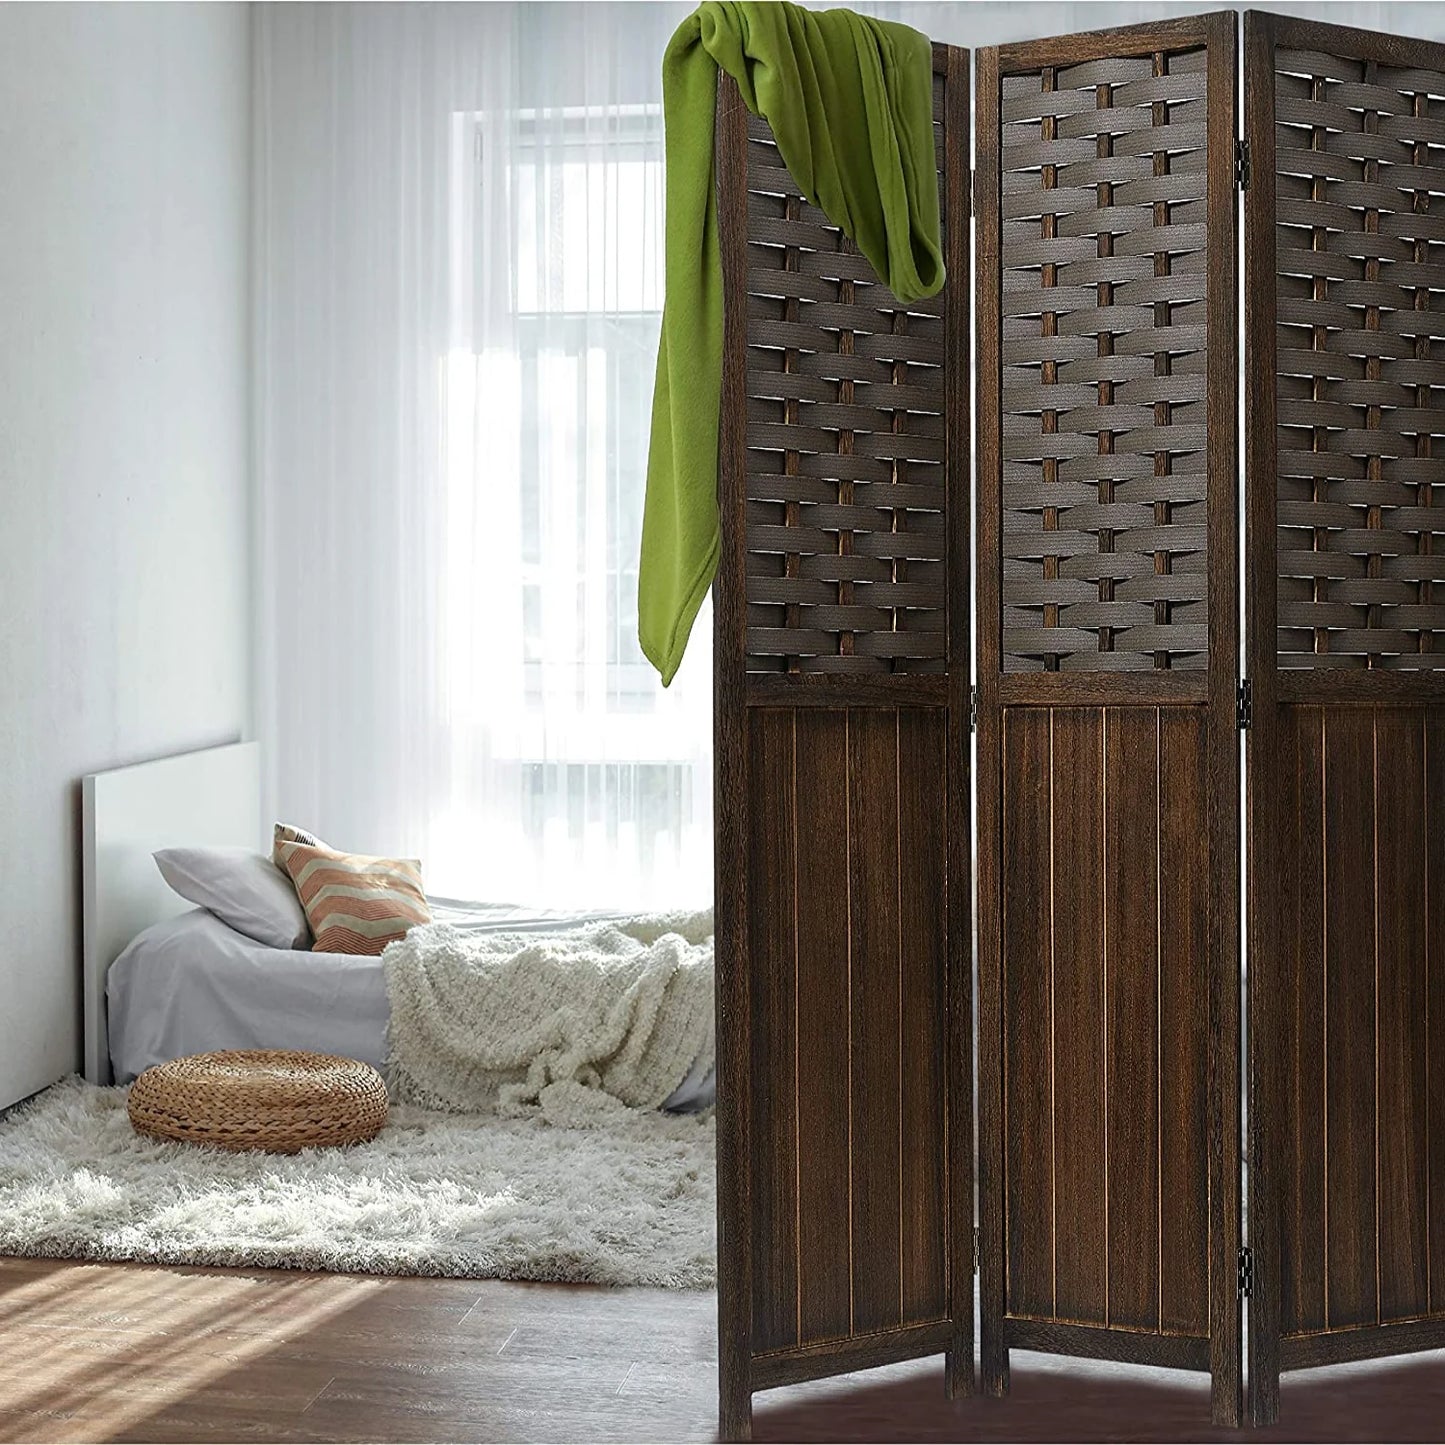 3 Panel Screen Divider - Freestanding Wood Divider